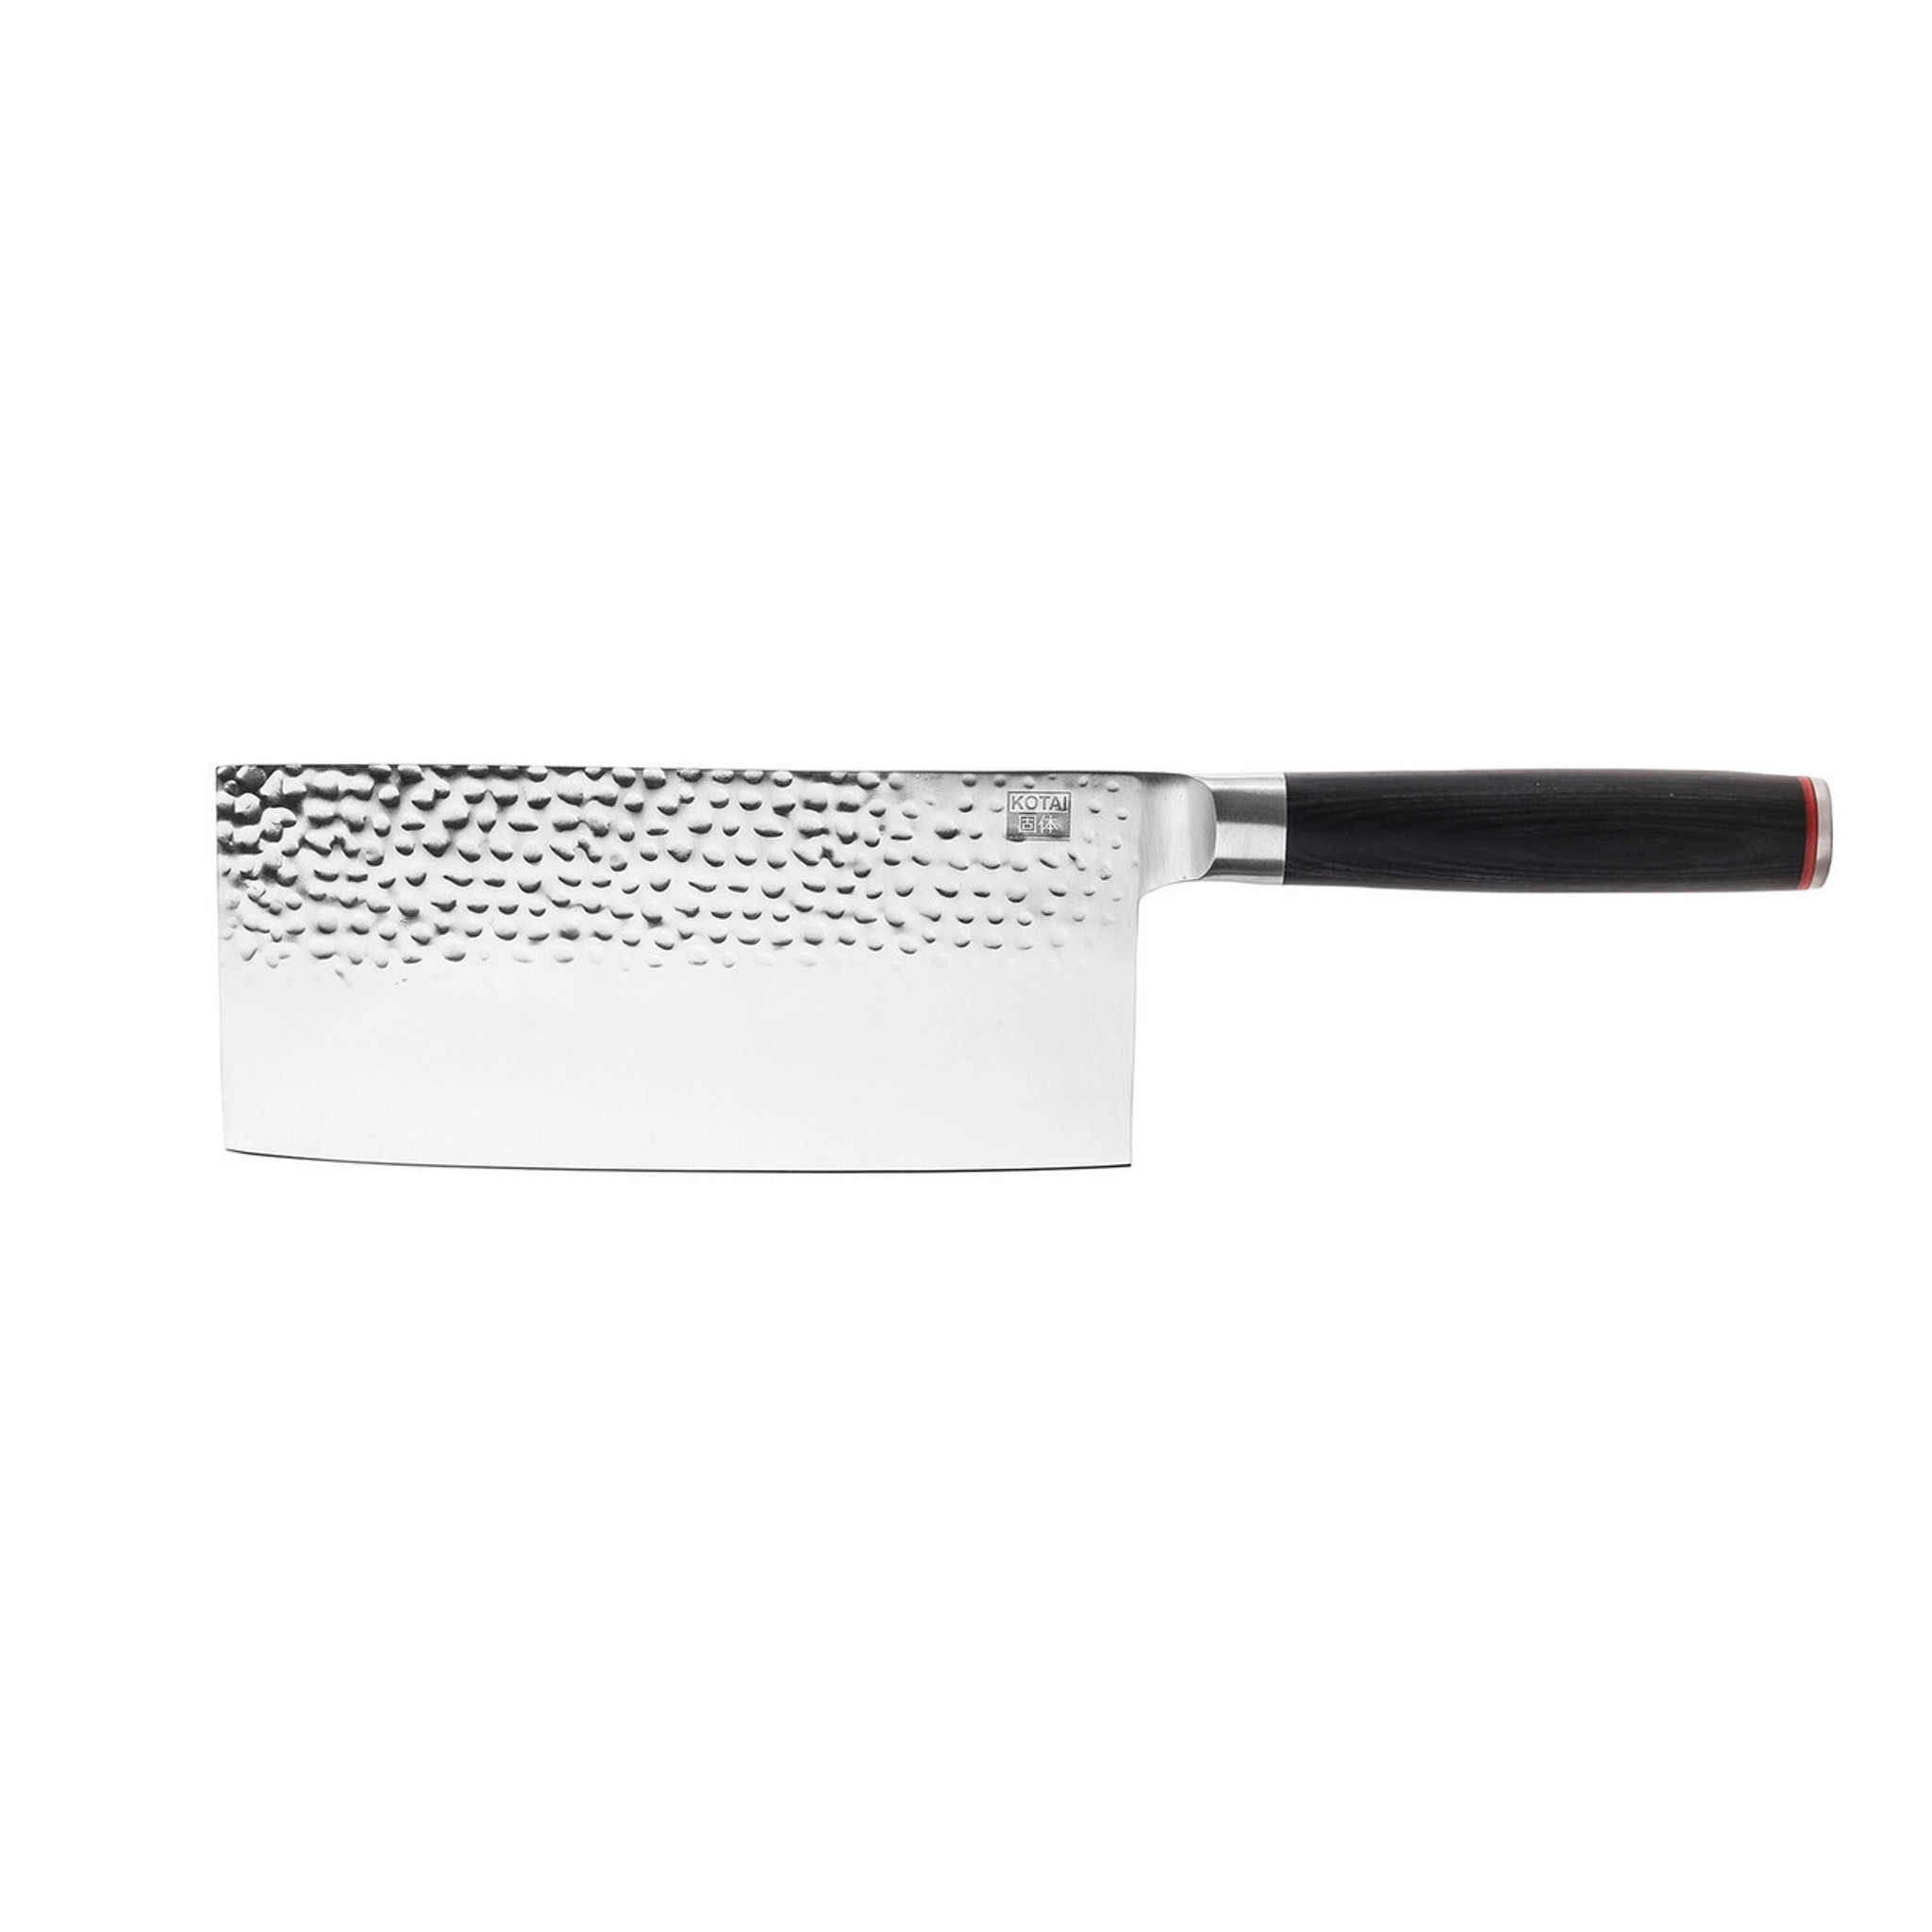 KOTAI Cleaver (Chinese Chef's Knife) - Pakka Collection - 7.5" Blade + Gift Box 